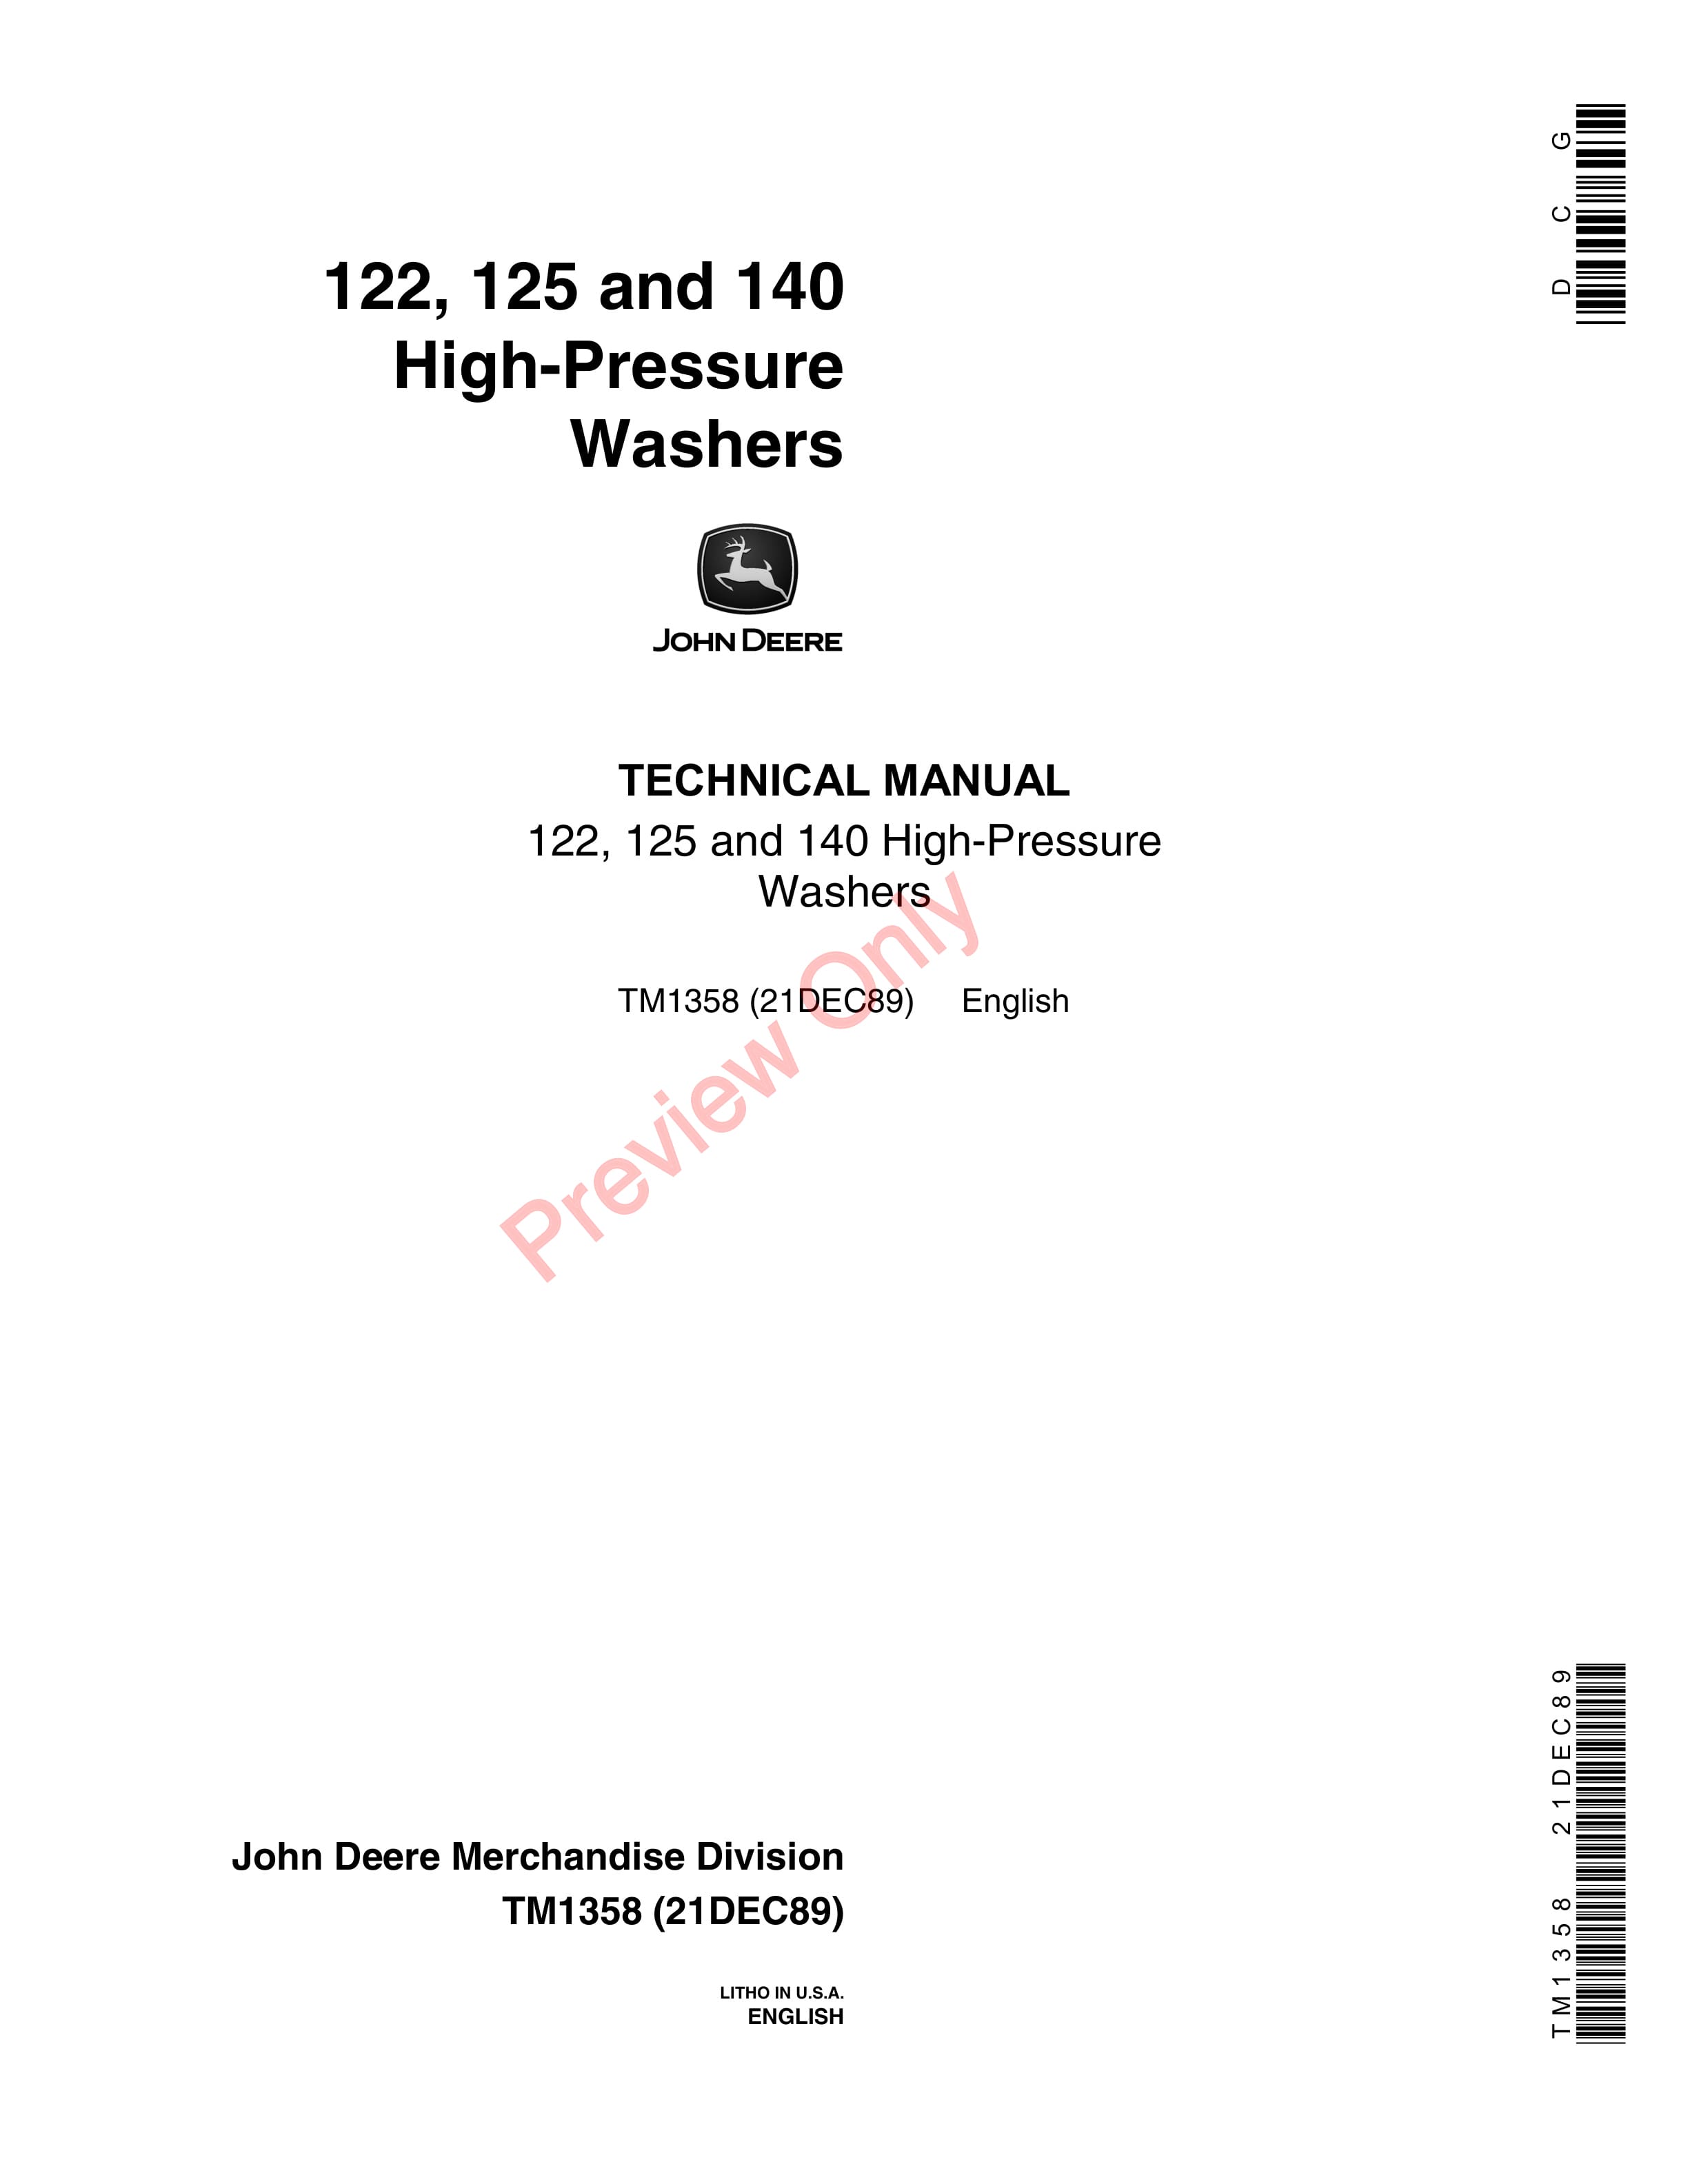 John Deere 122 125 140 High Pressure Washer Technical Manual TM1358 21DEC89 1